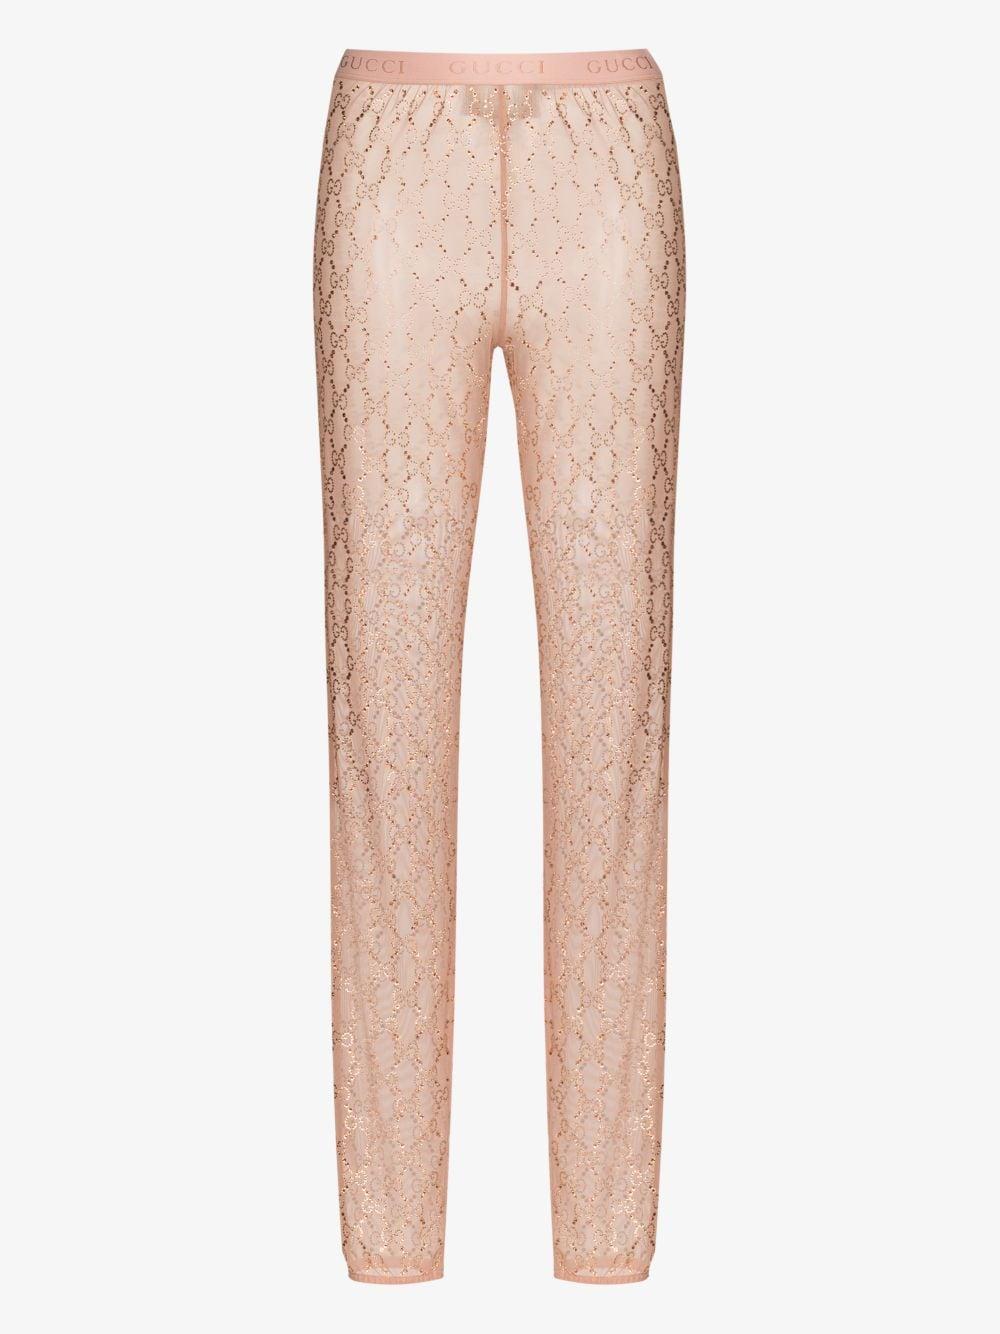 Gucci GG Embellished Sheer leggings | Lyst